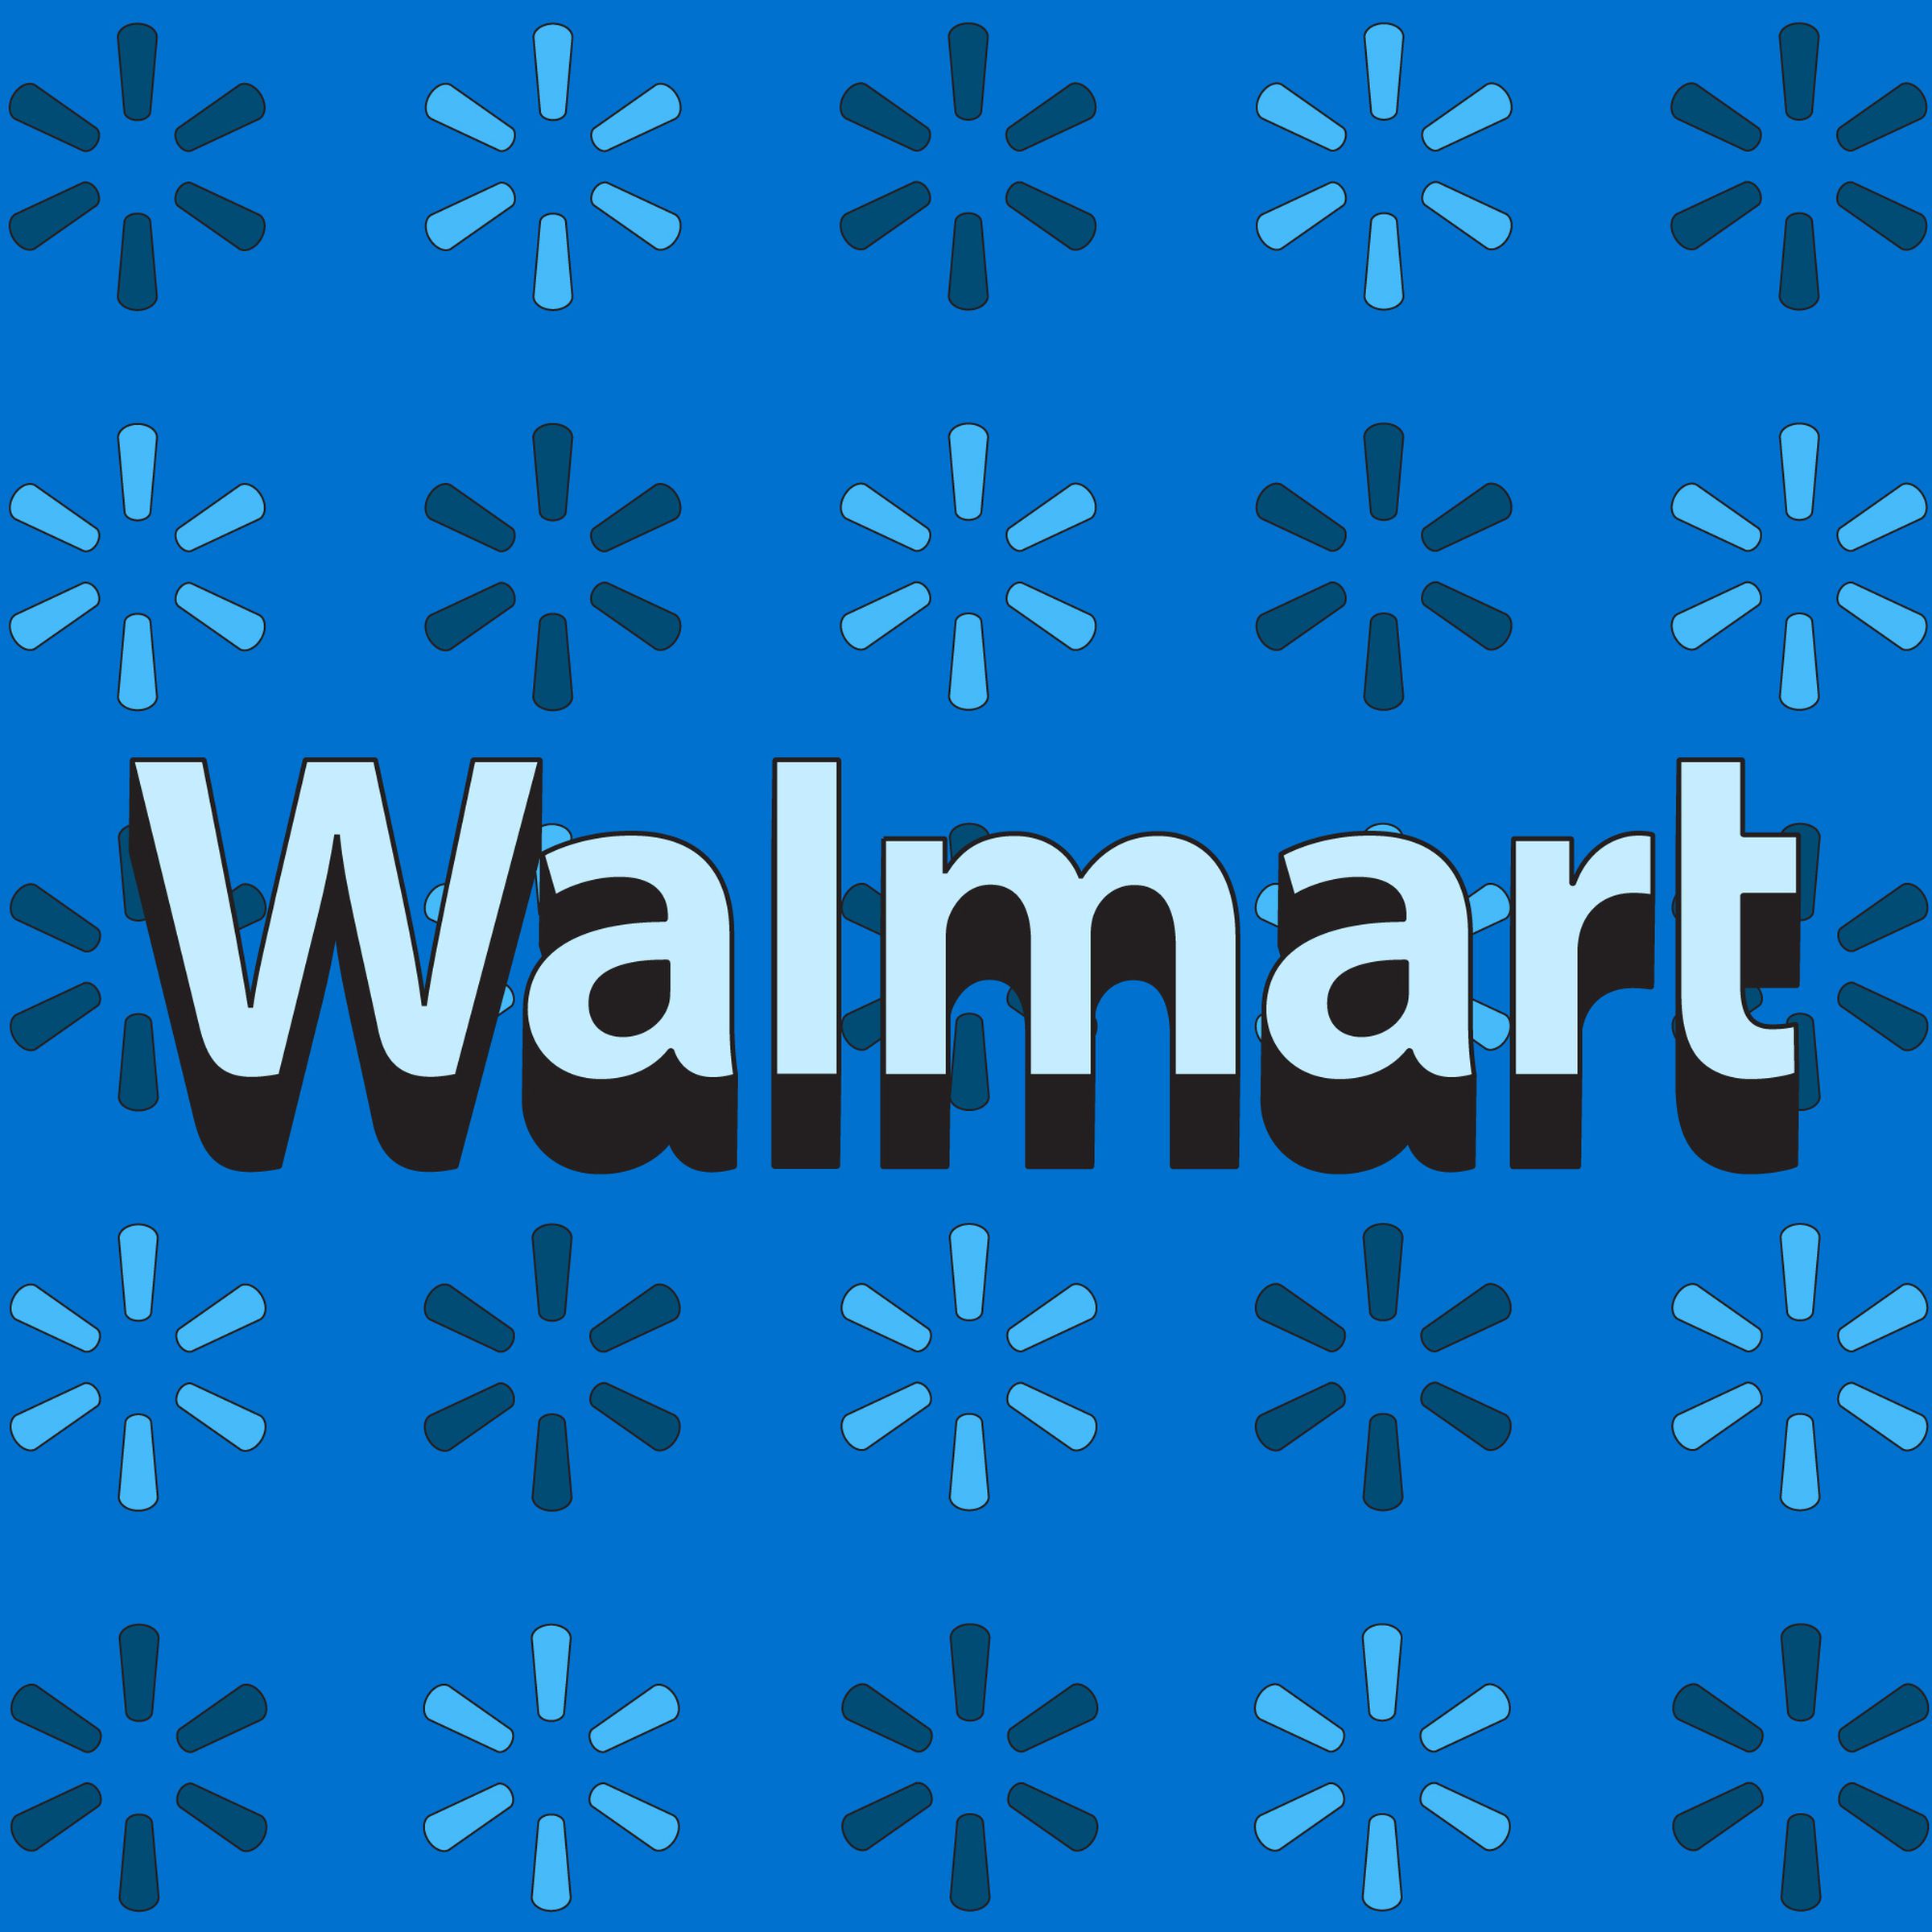 A stock photo of the Walmart logo